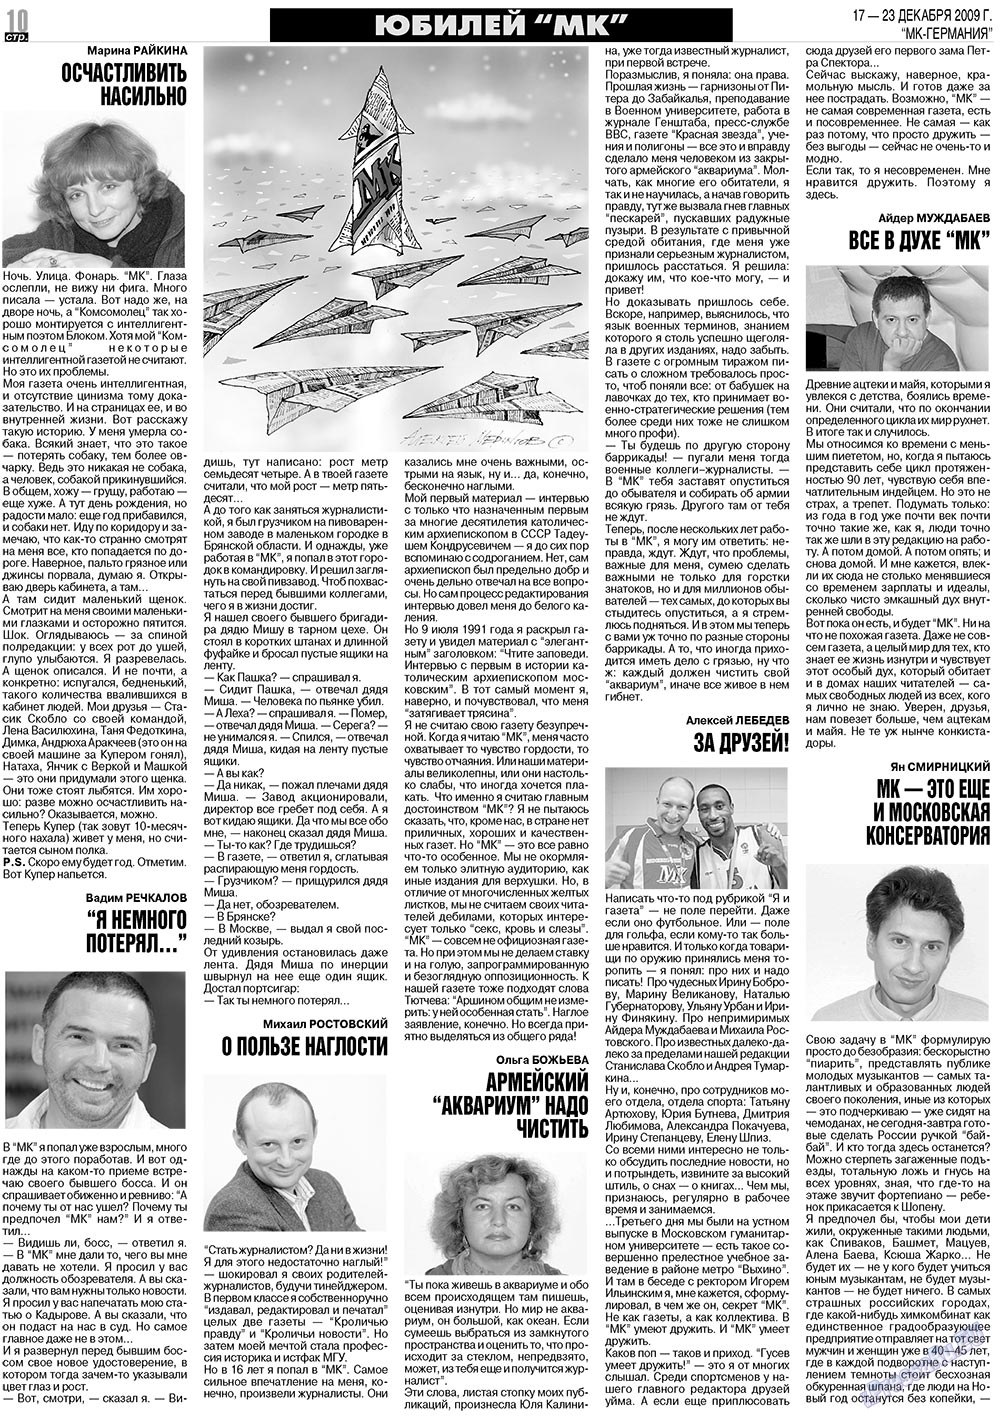 МК-Германия, газета. 2009 №51 стр.10